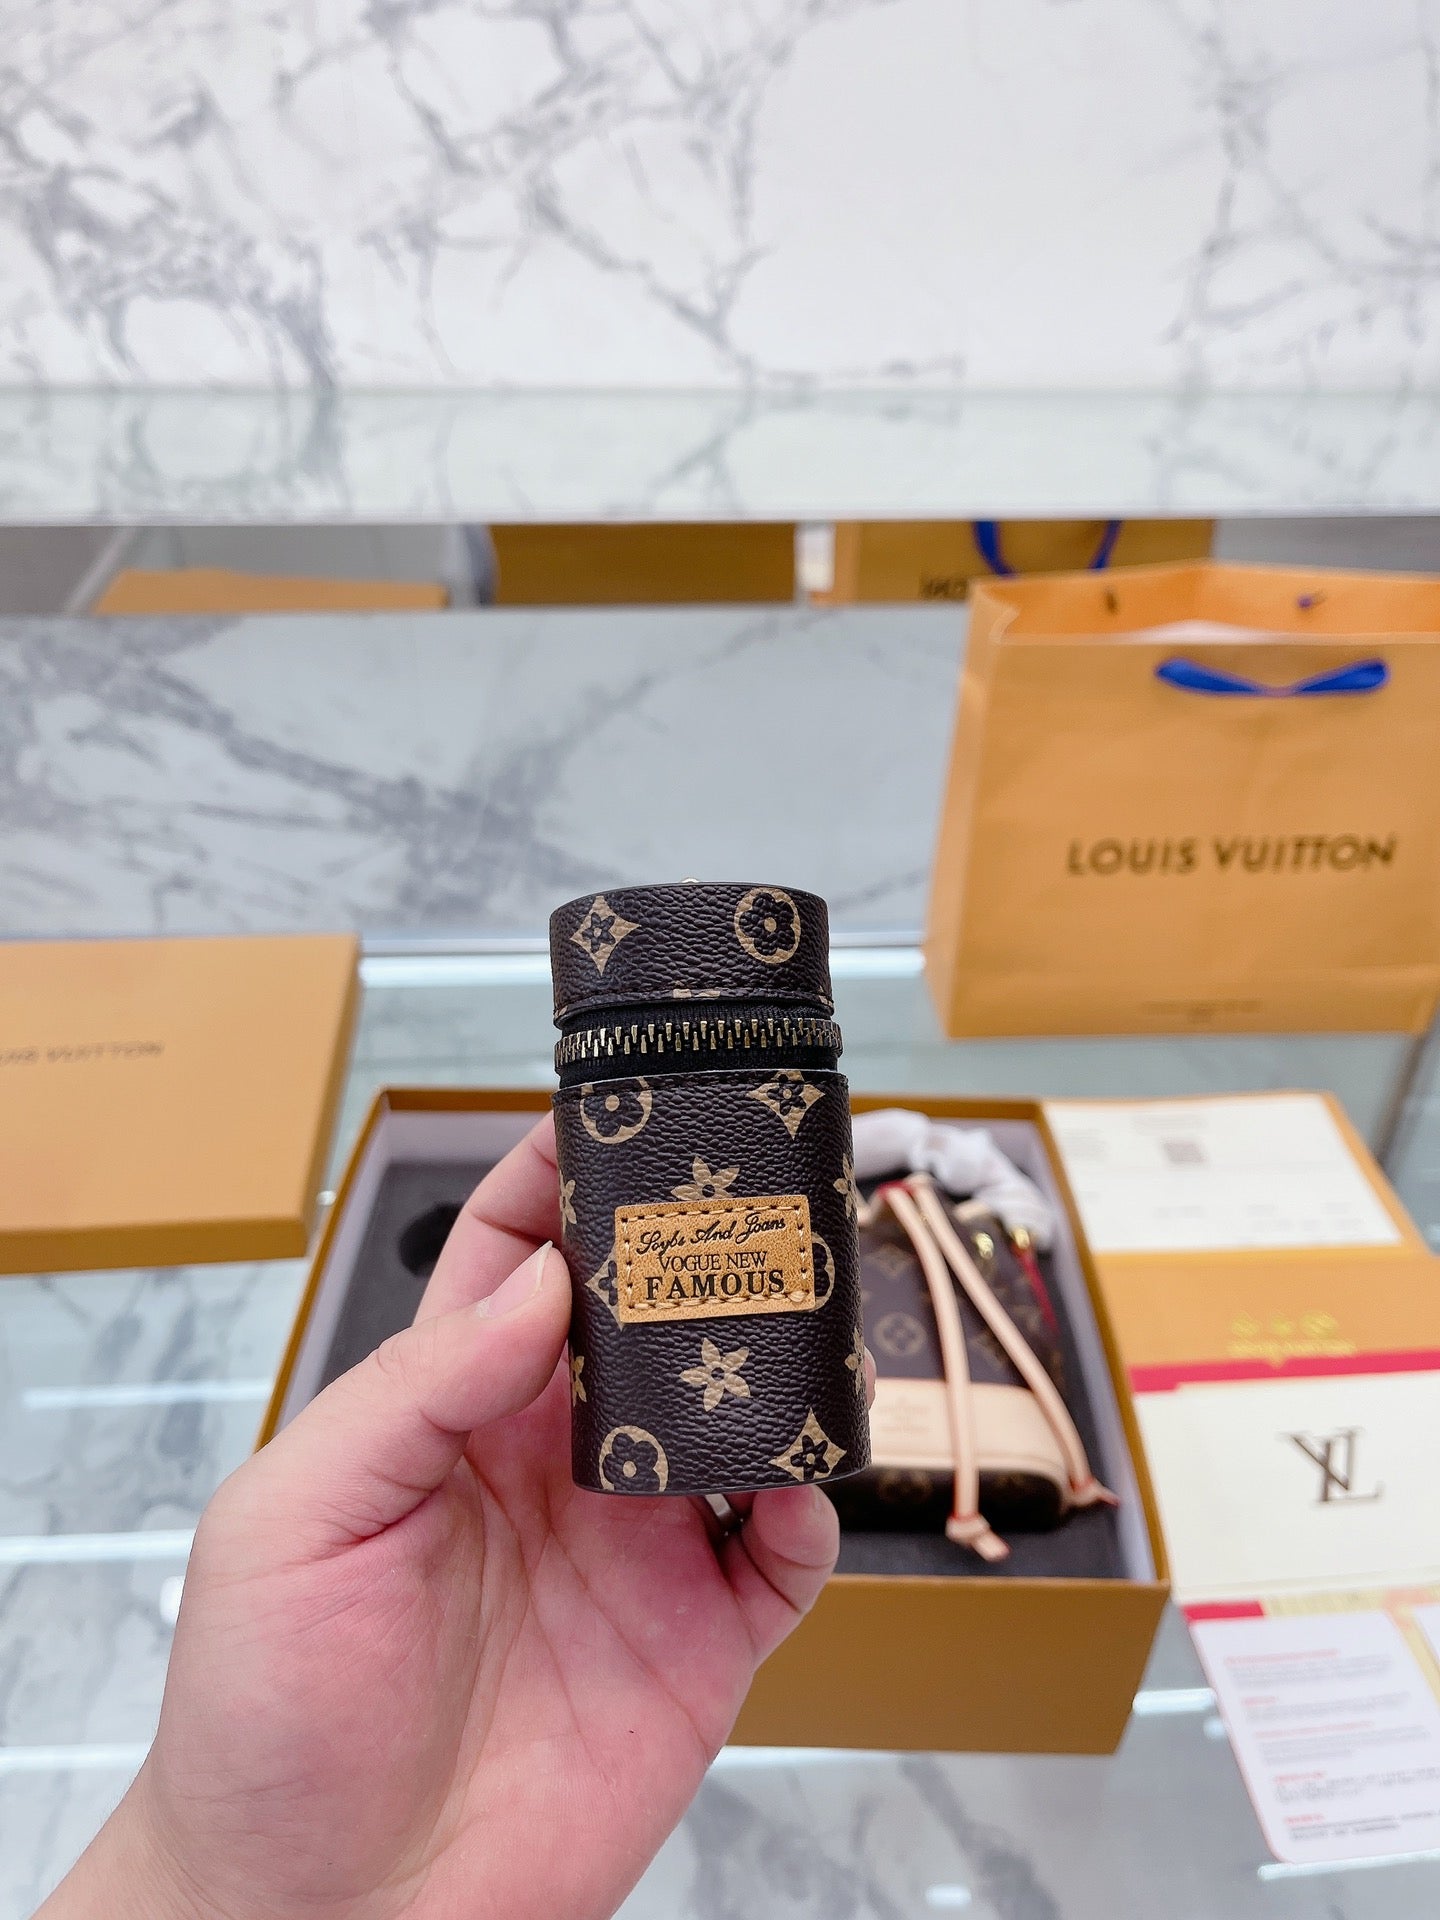 Louis Vuitton, Other, Louis Vuitton Box And Bag